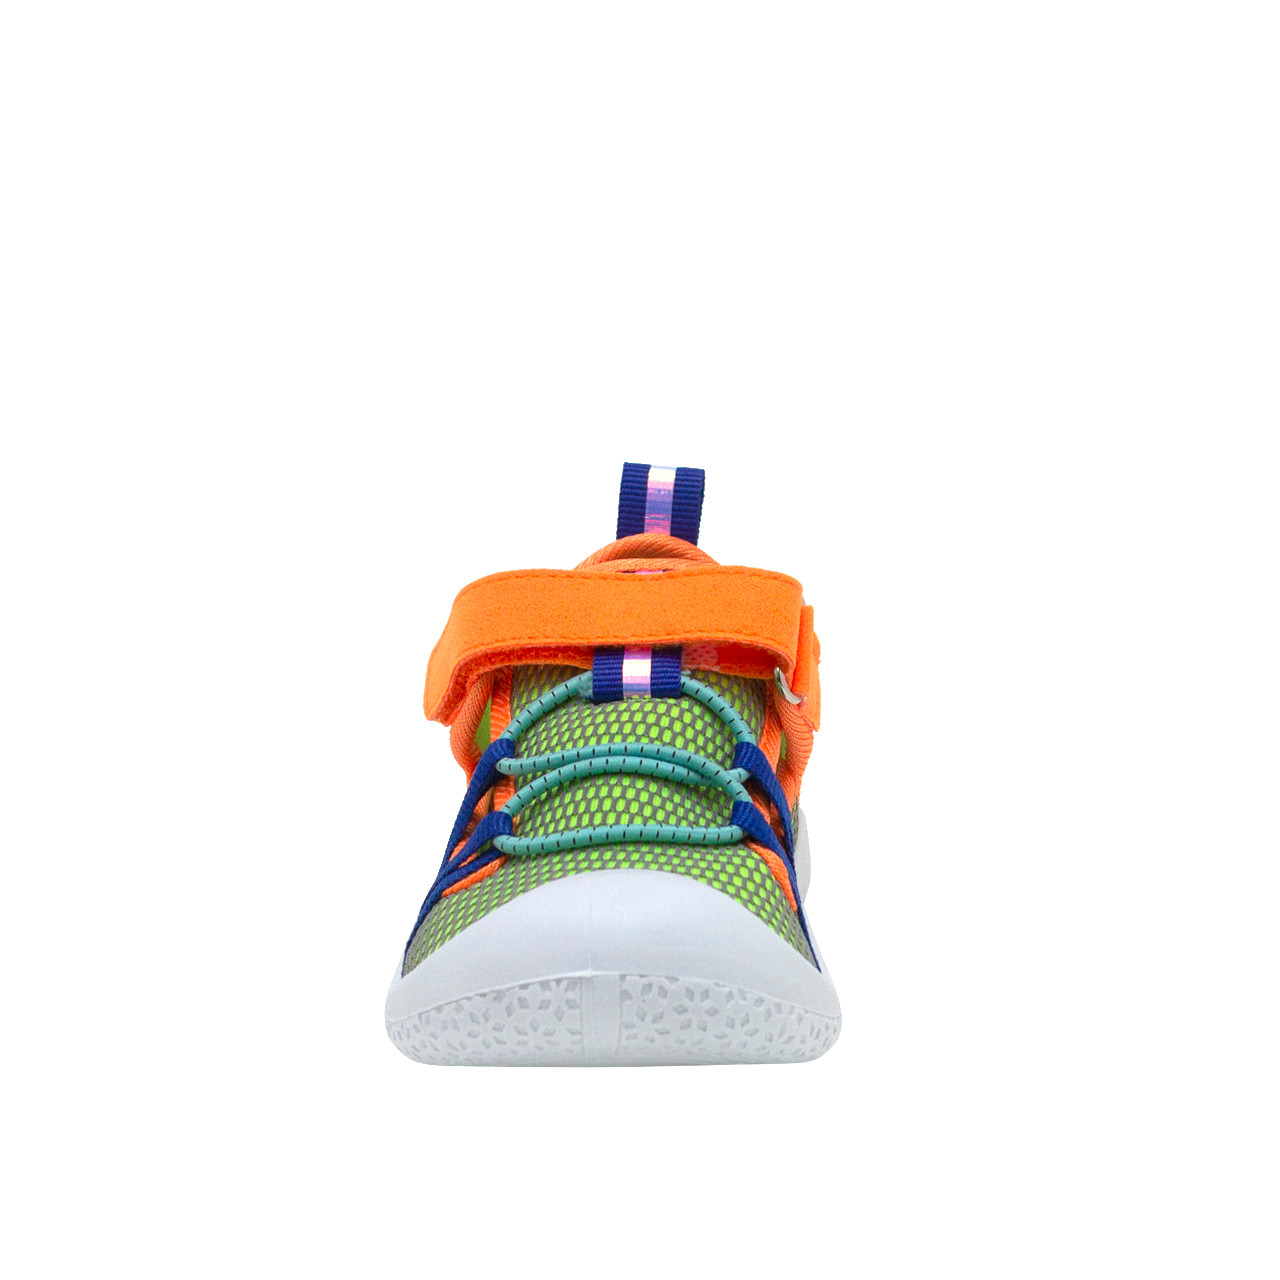 Splash Water Shoes | Green Toddler Boy Shoes | Shop at Robeez